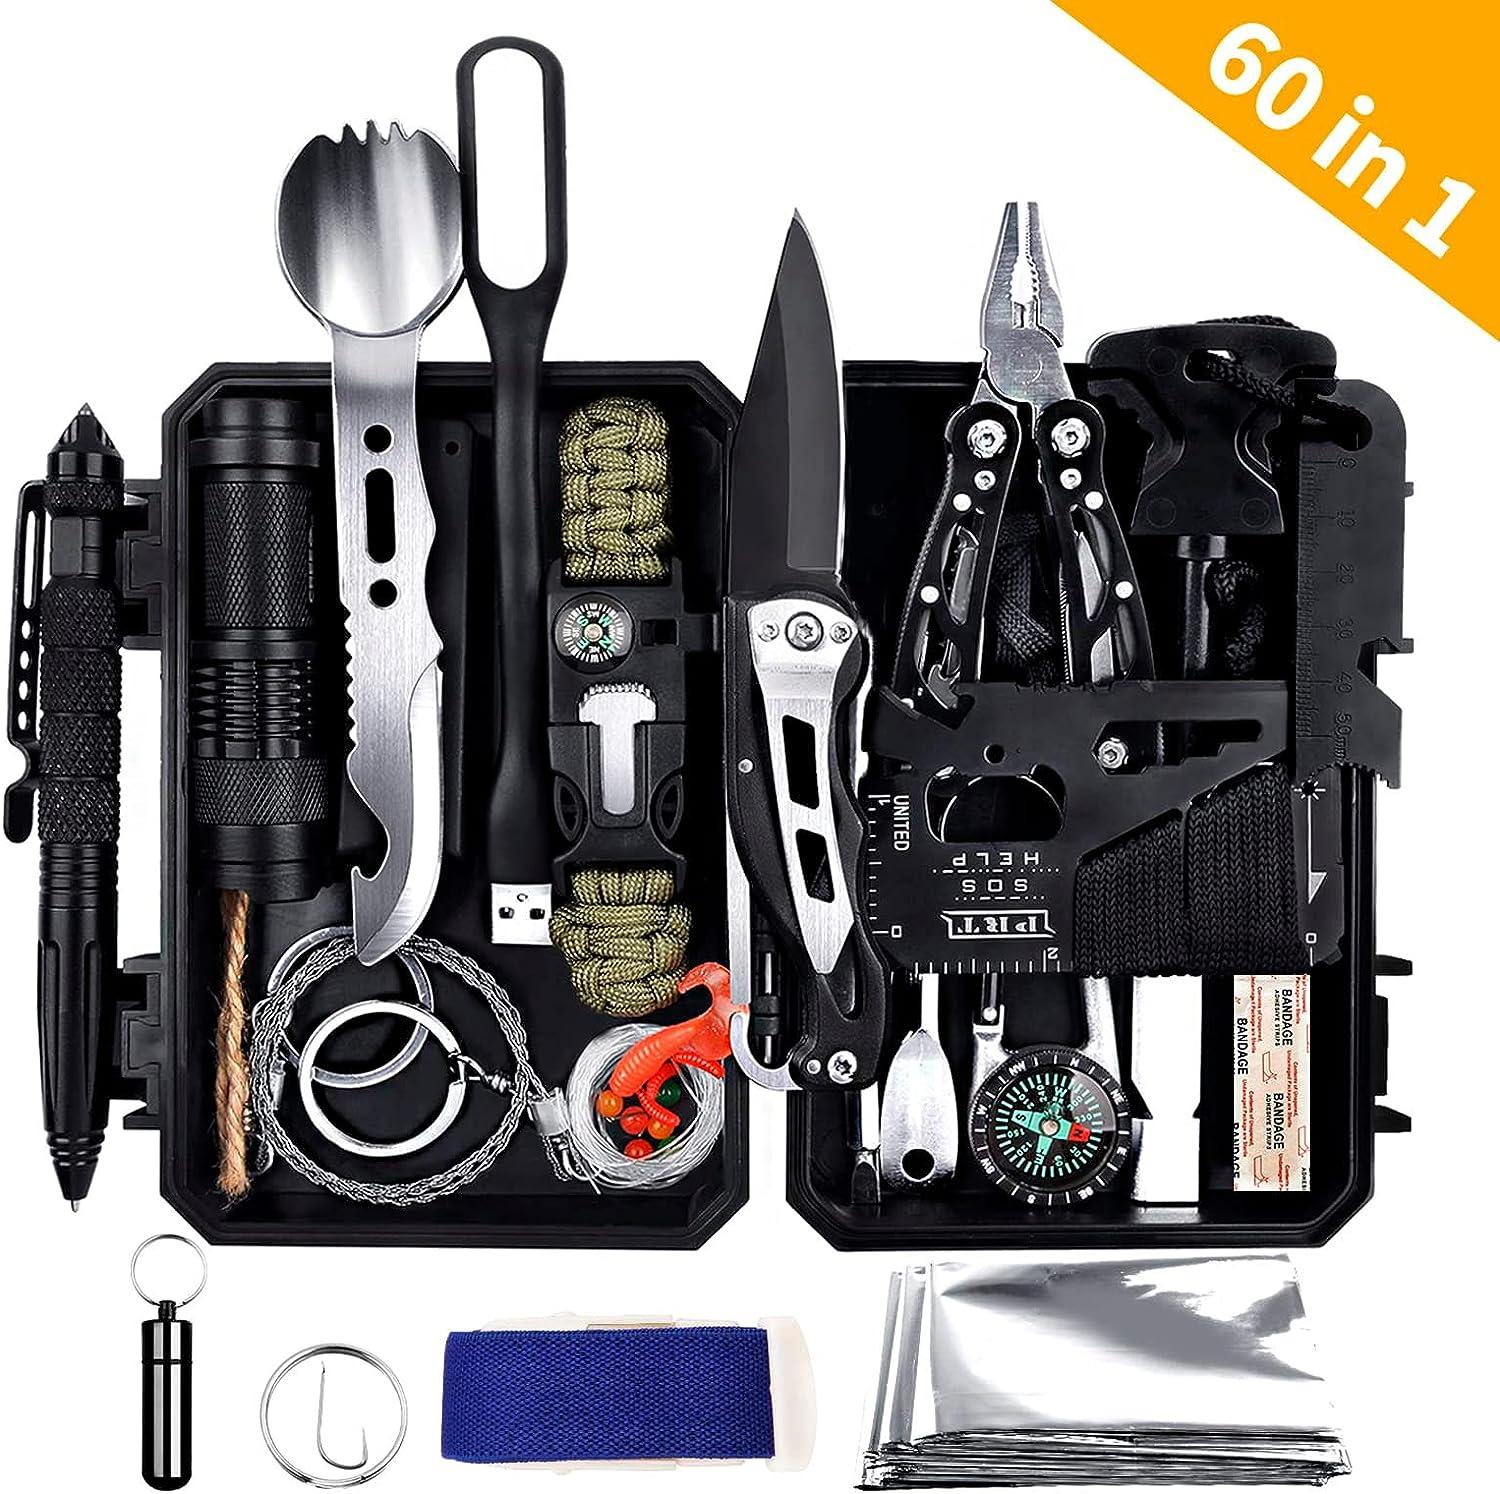 ANTARCTICA Gift for Men EDC Gear, Emergency Survival Gear Kits 60